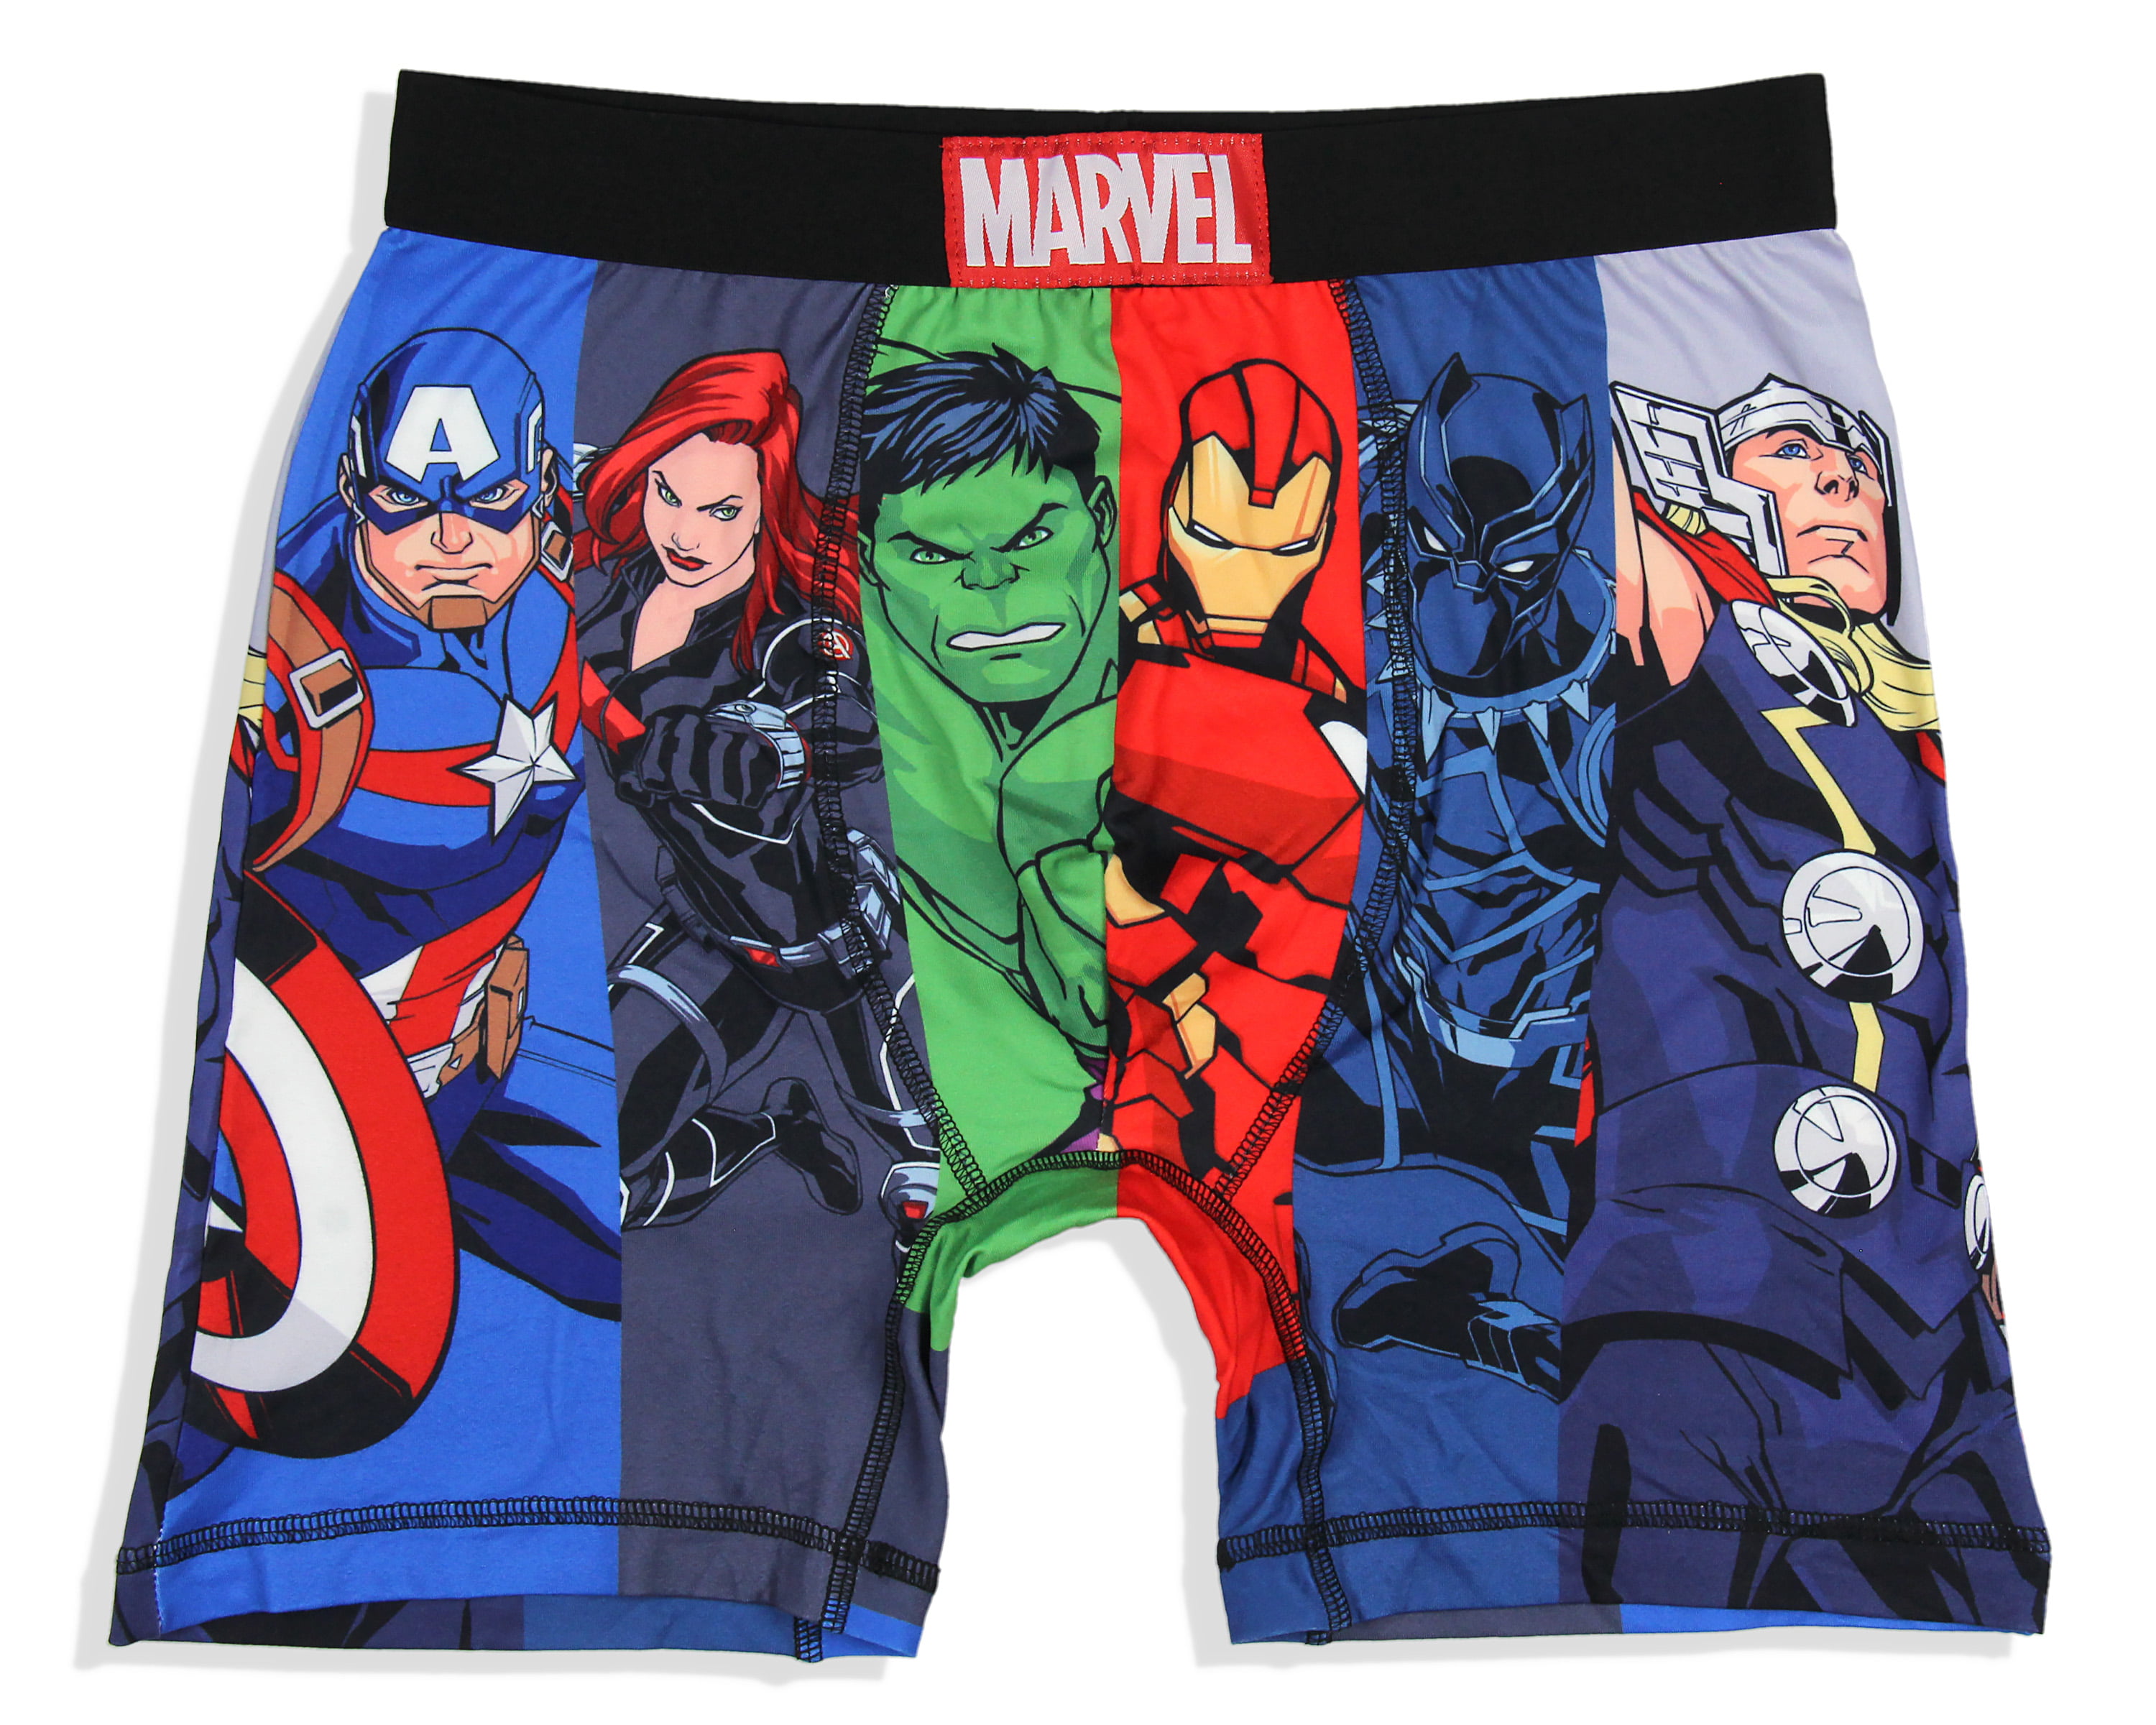 Marvel Mens' 2 Pack The Avengers Comic Boxers Underwear Boxer Briefs (Large)